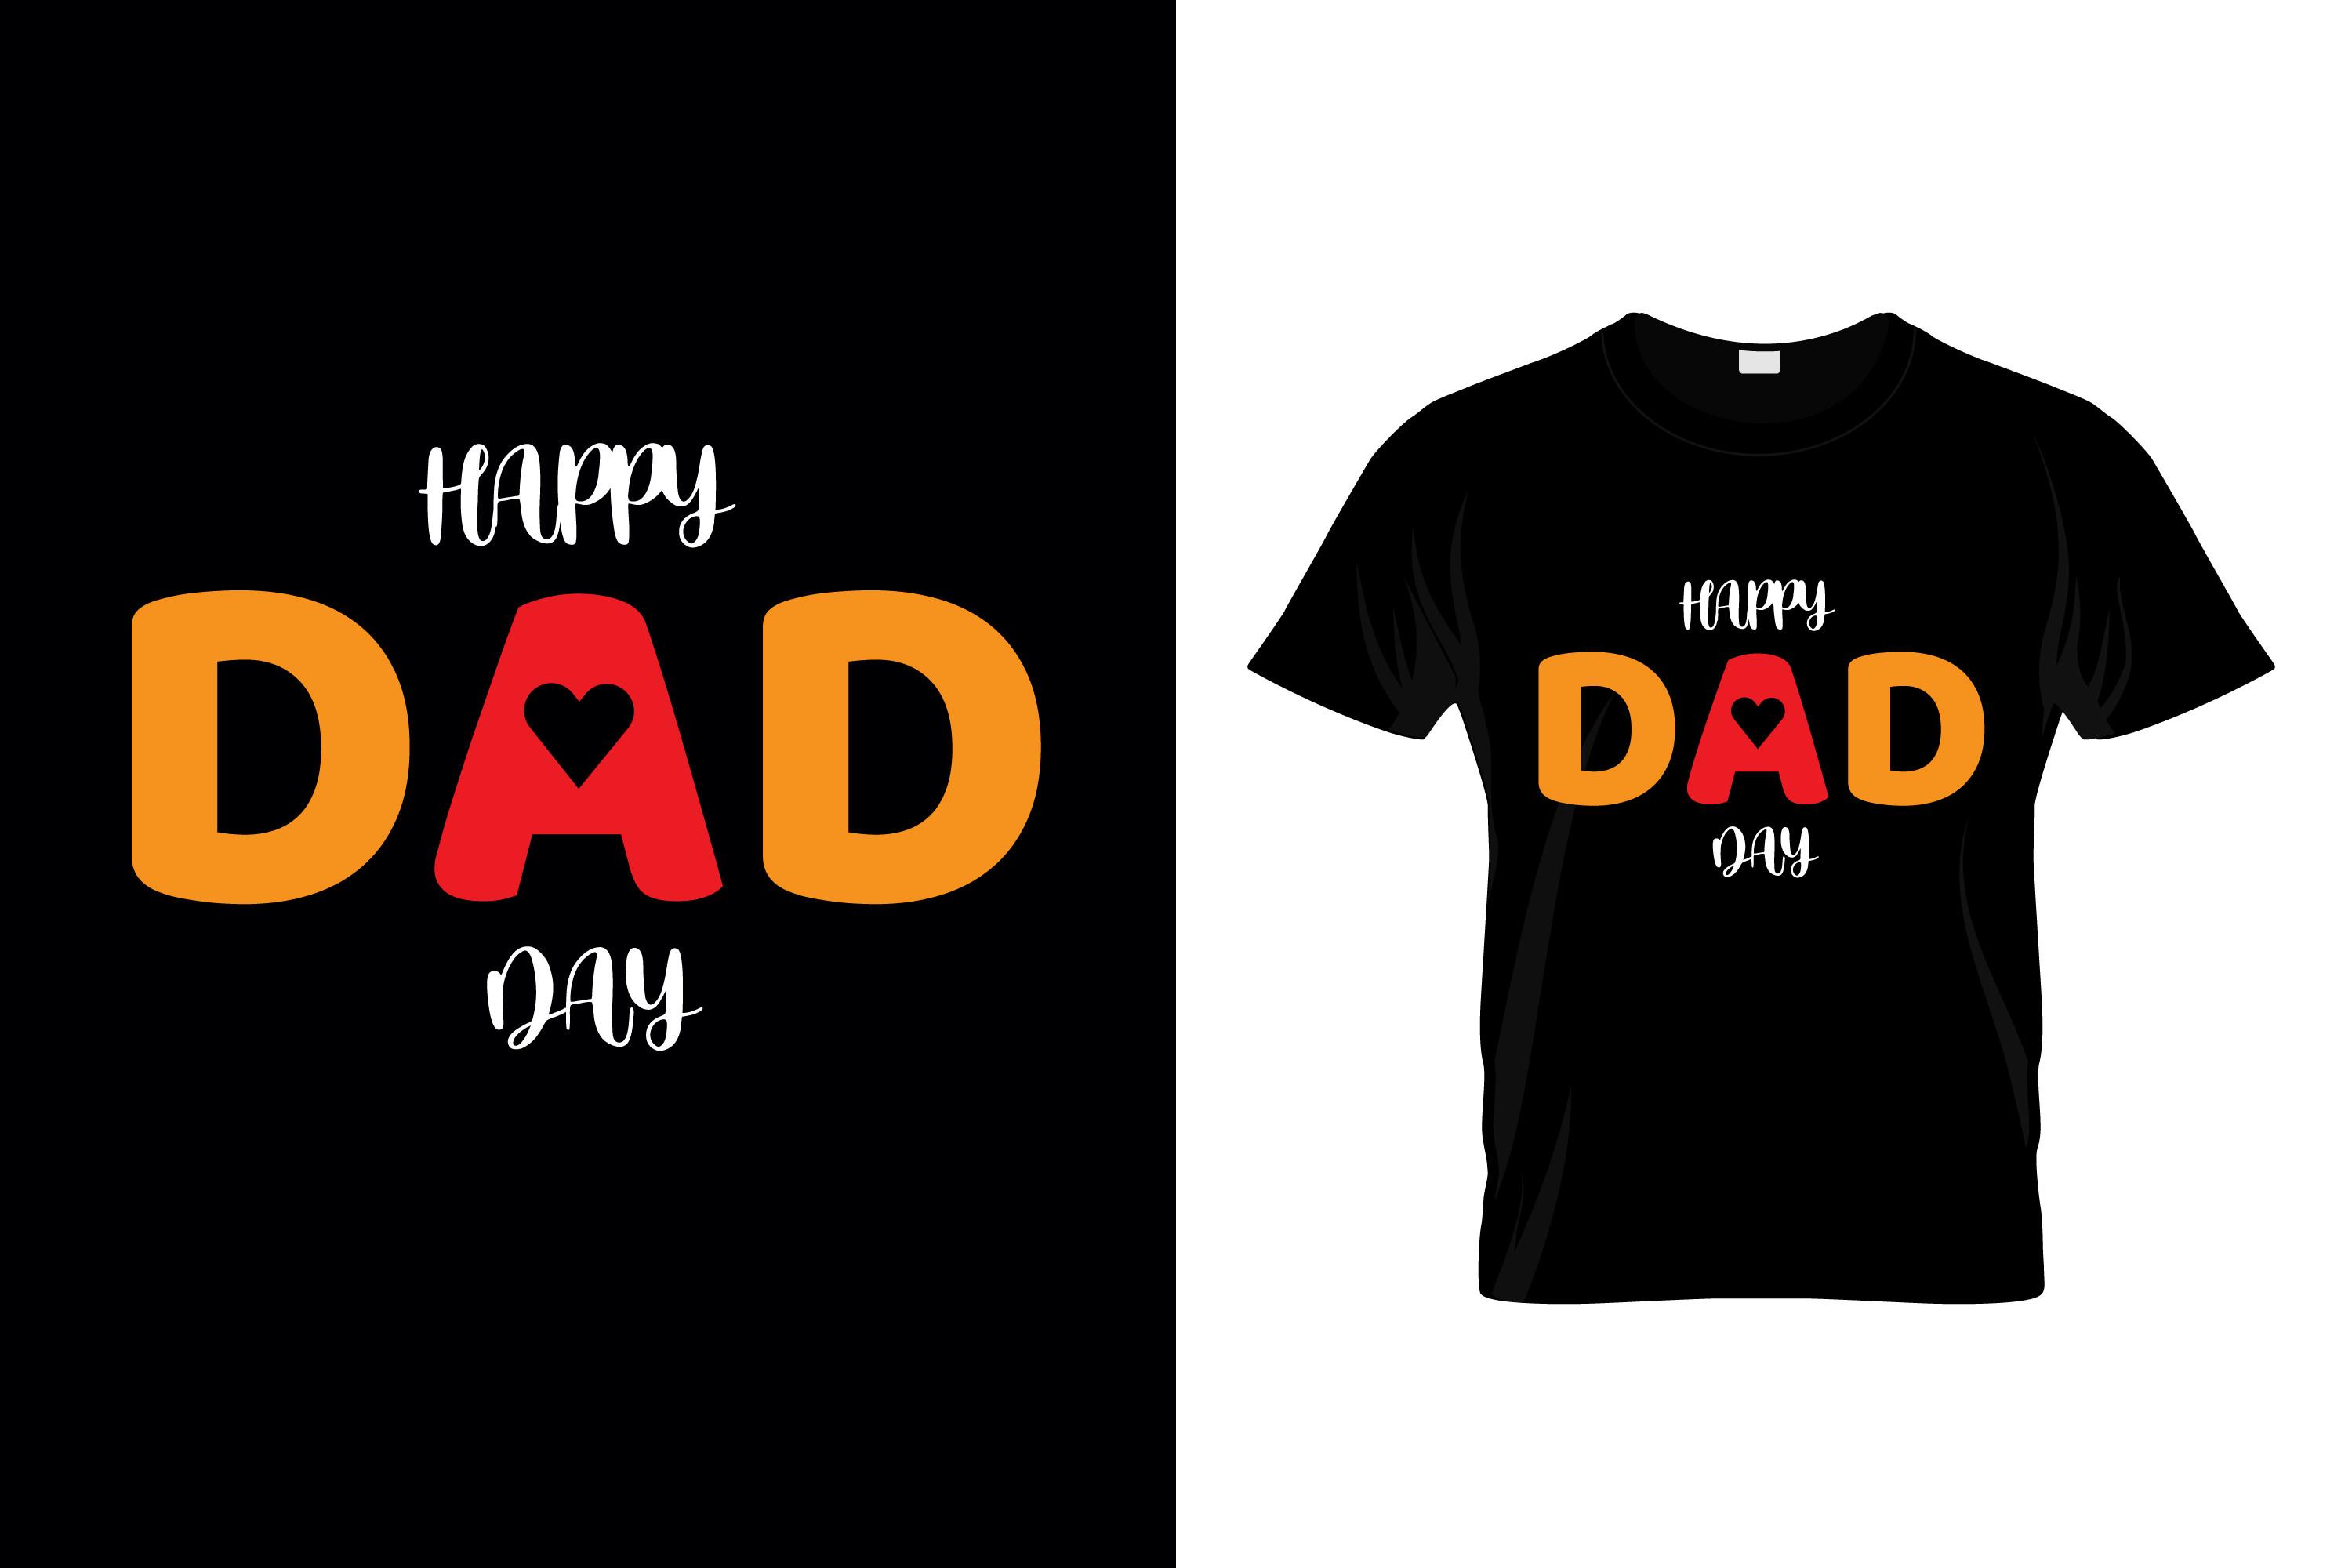 Happy Dad Day Free T-Shirt Design